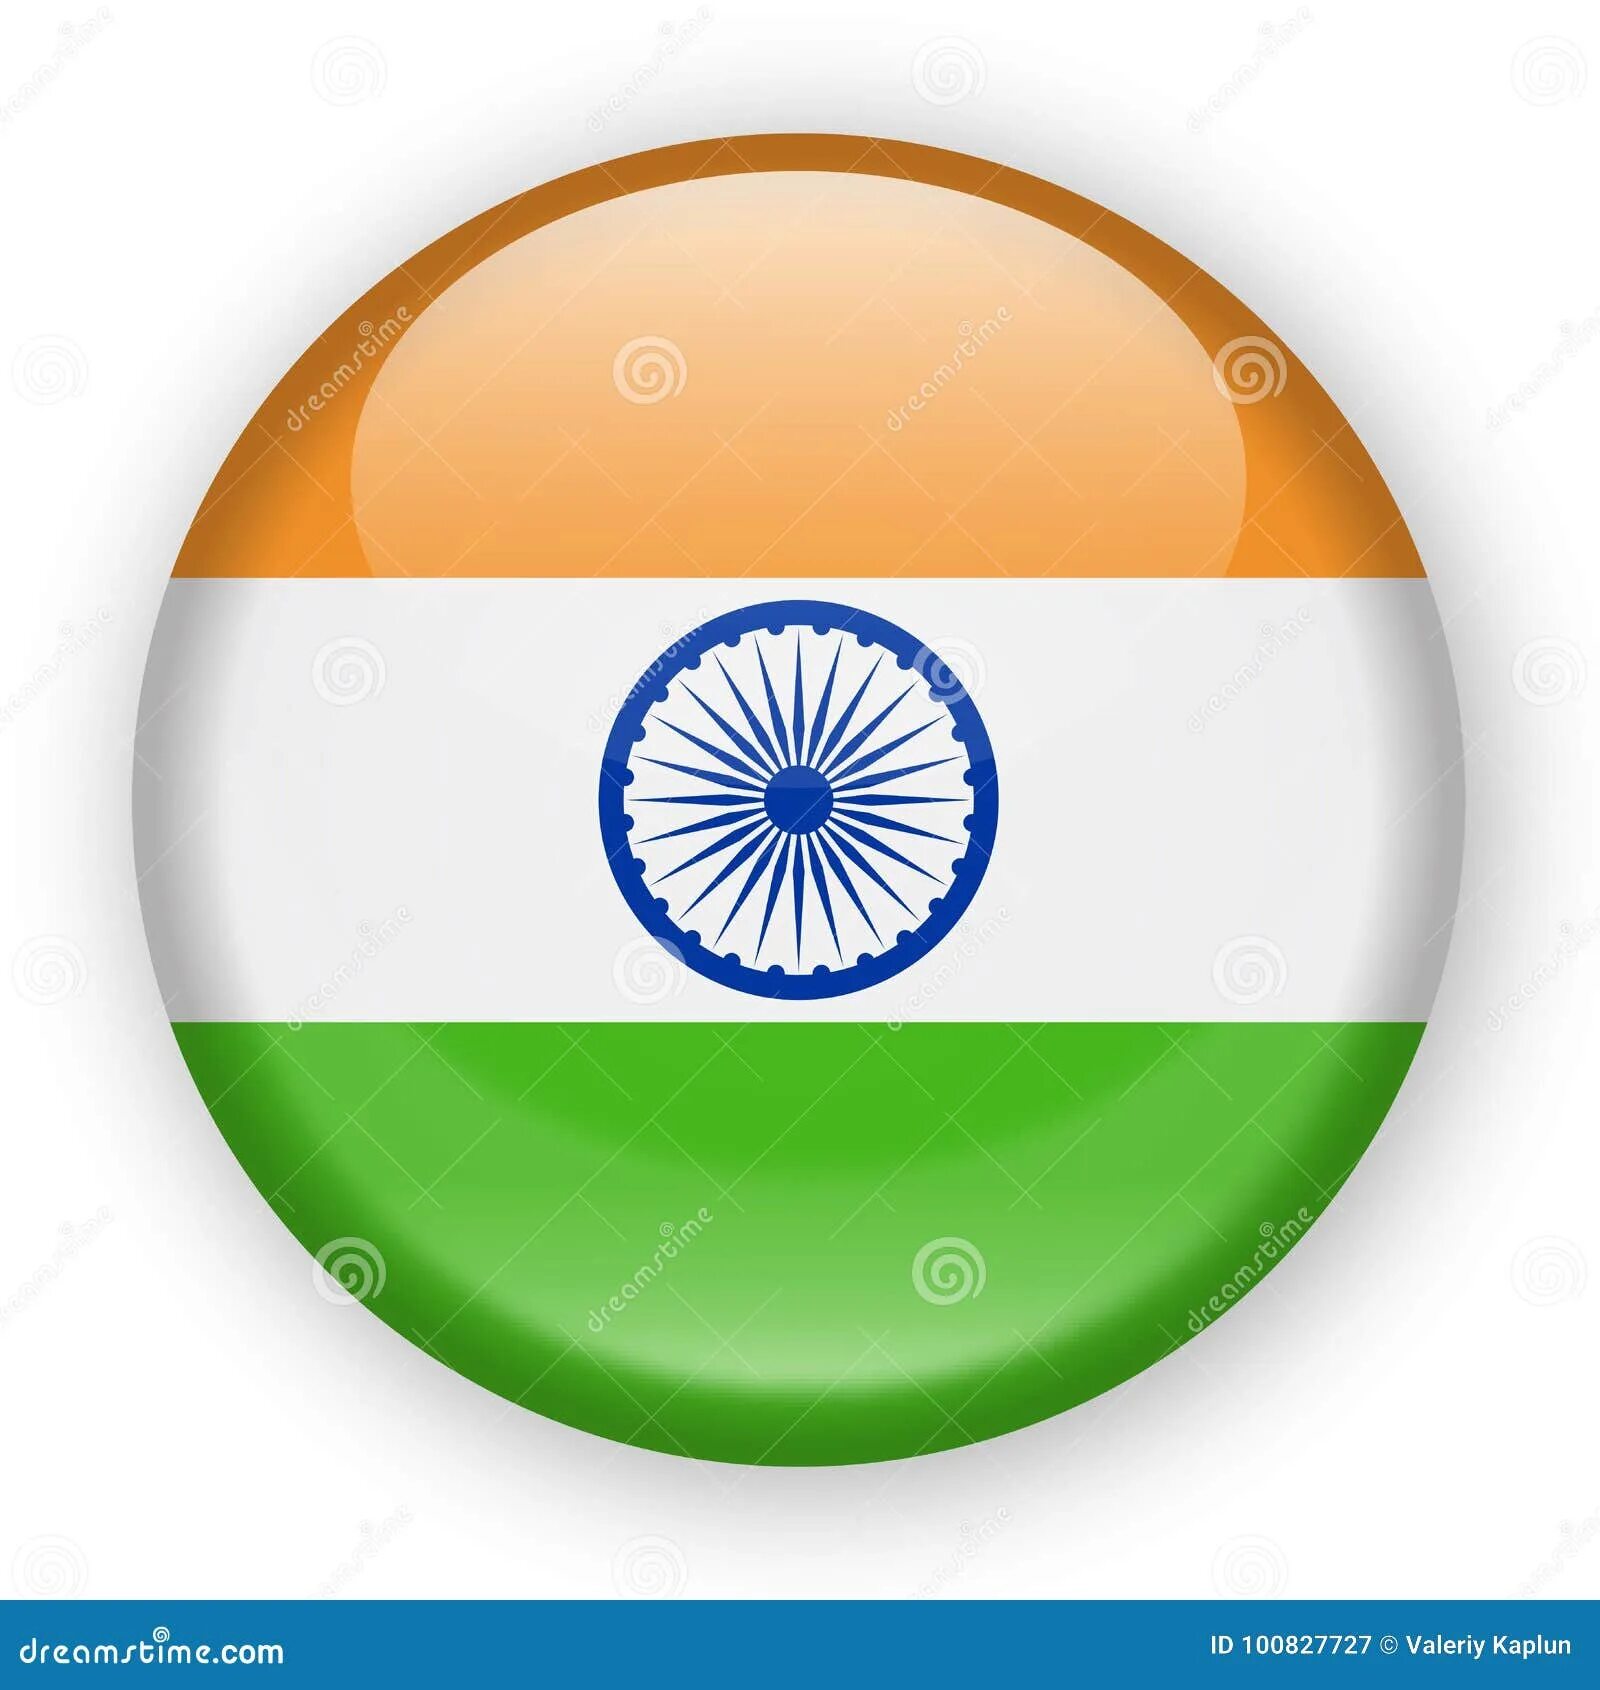 Флаг с кругом в центре. Флаг Индии. Флаг Индии в круге. Флаг Индии круглый. Флаг Индии иконка.